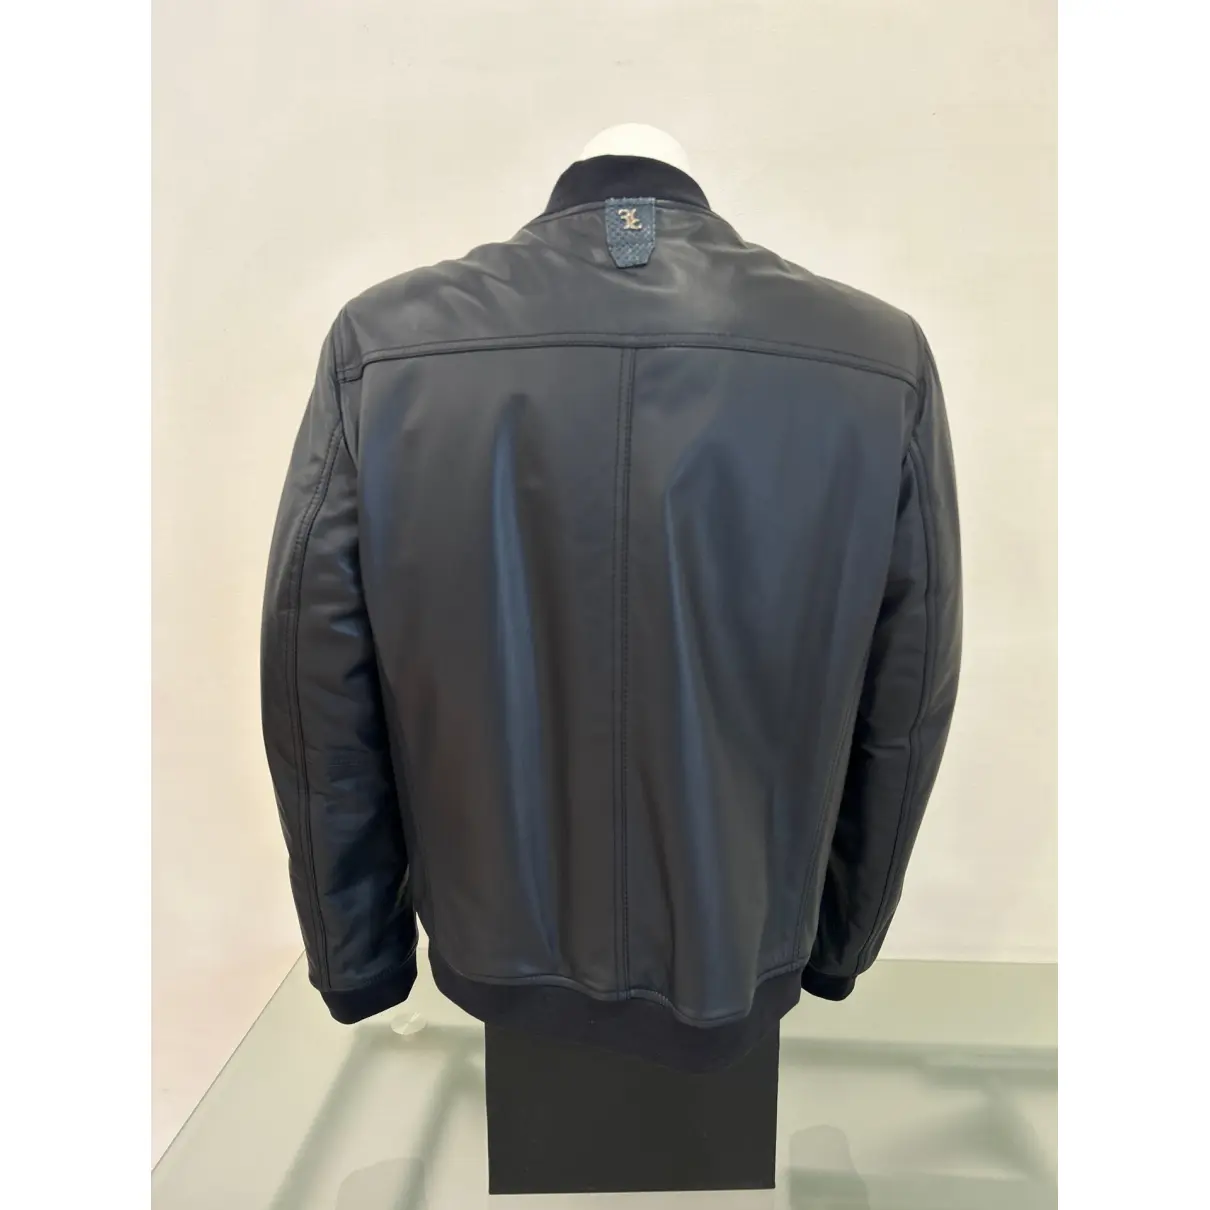 Buy Billionaire Leather jacket online